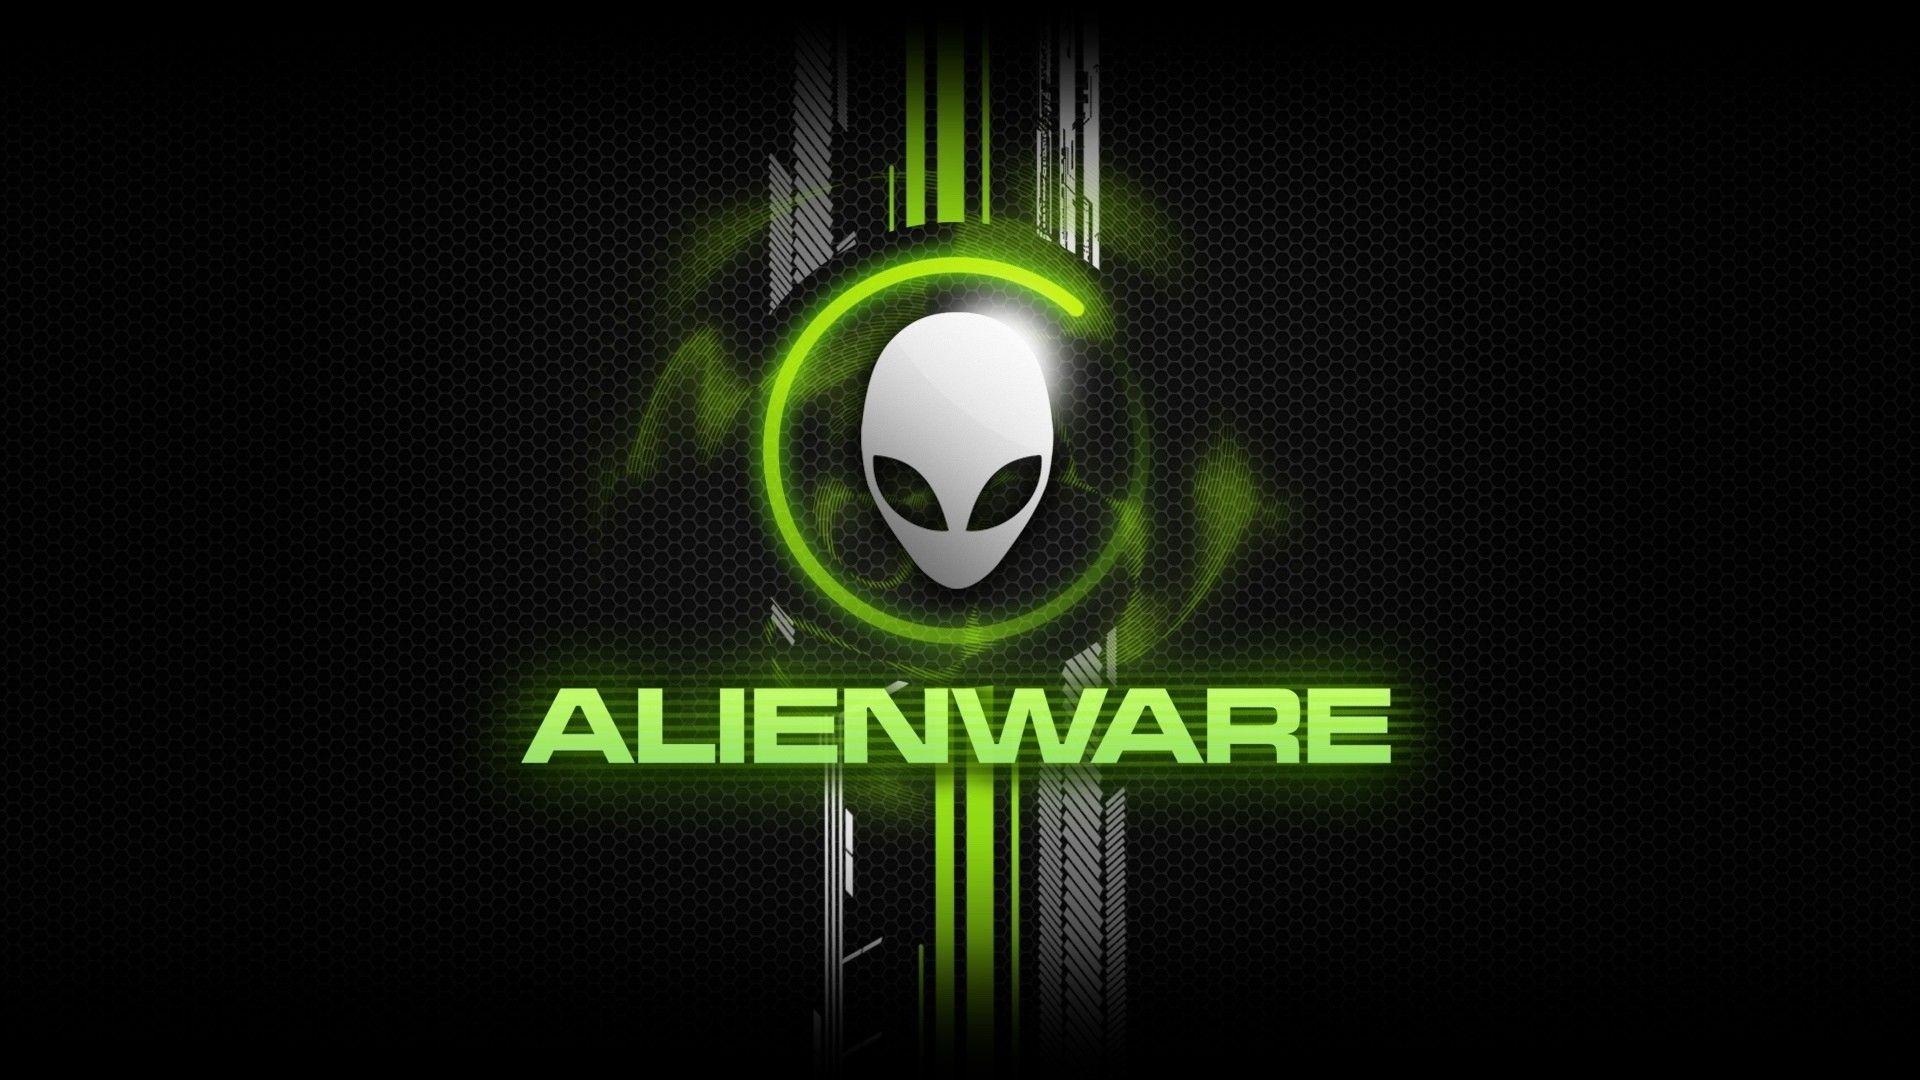 Green Alienware Wallpaper 30505 Hi Resolution. Best Free JPG